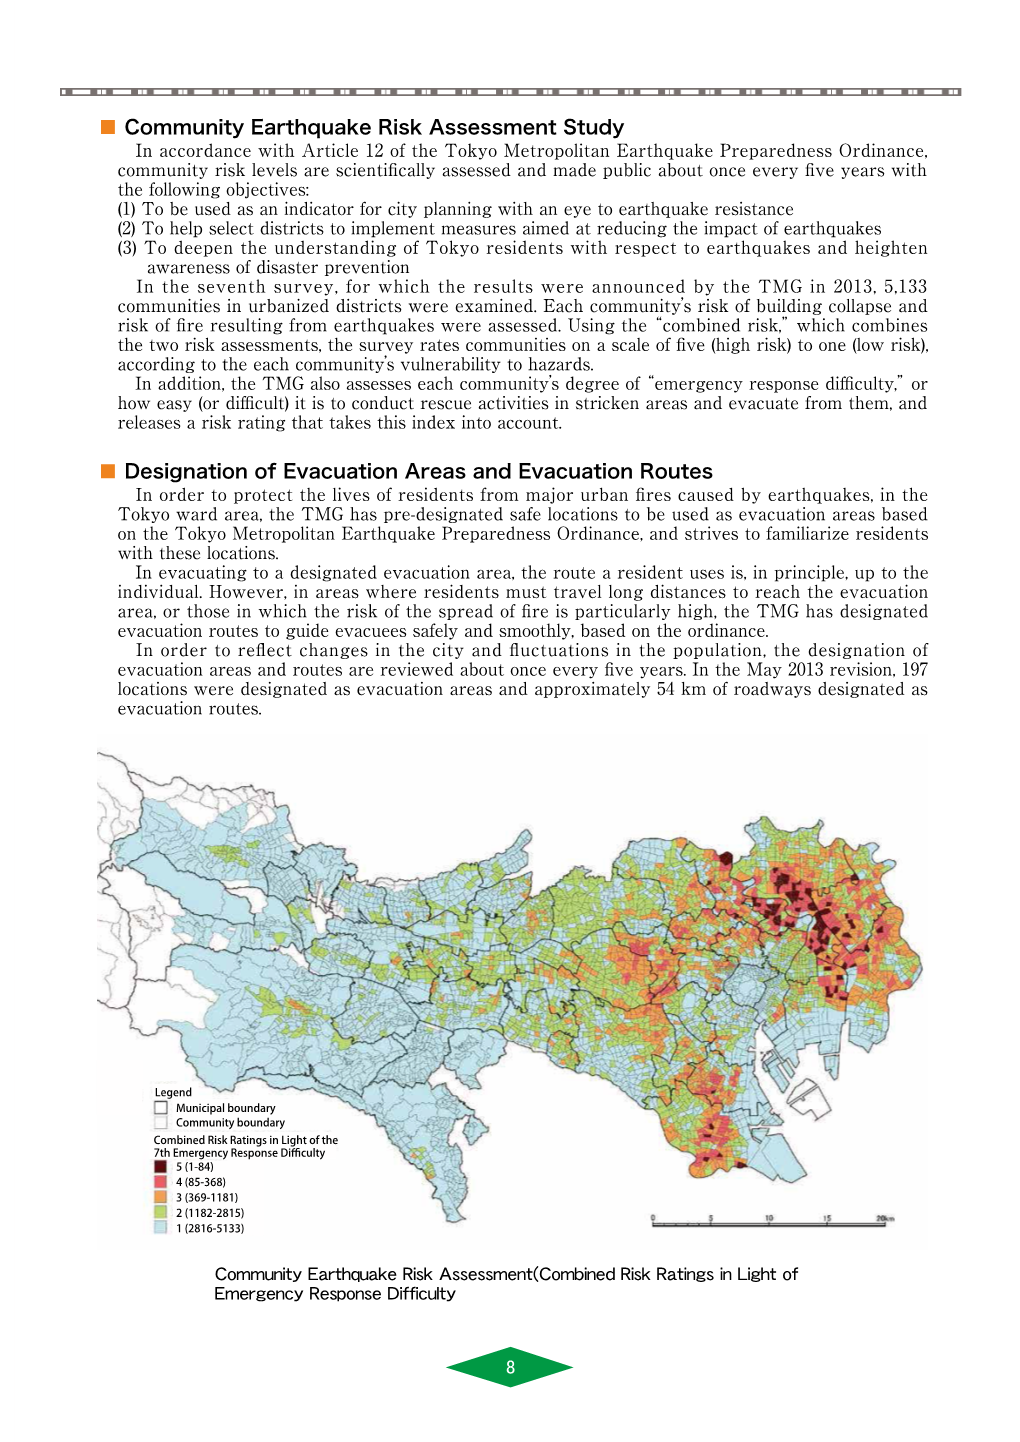 8 Community Earthquake Risk Assessment Study Designation of Evacuation Areas and Evacuation Routes